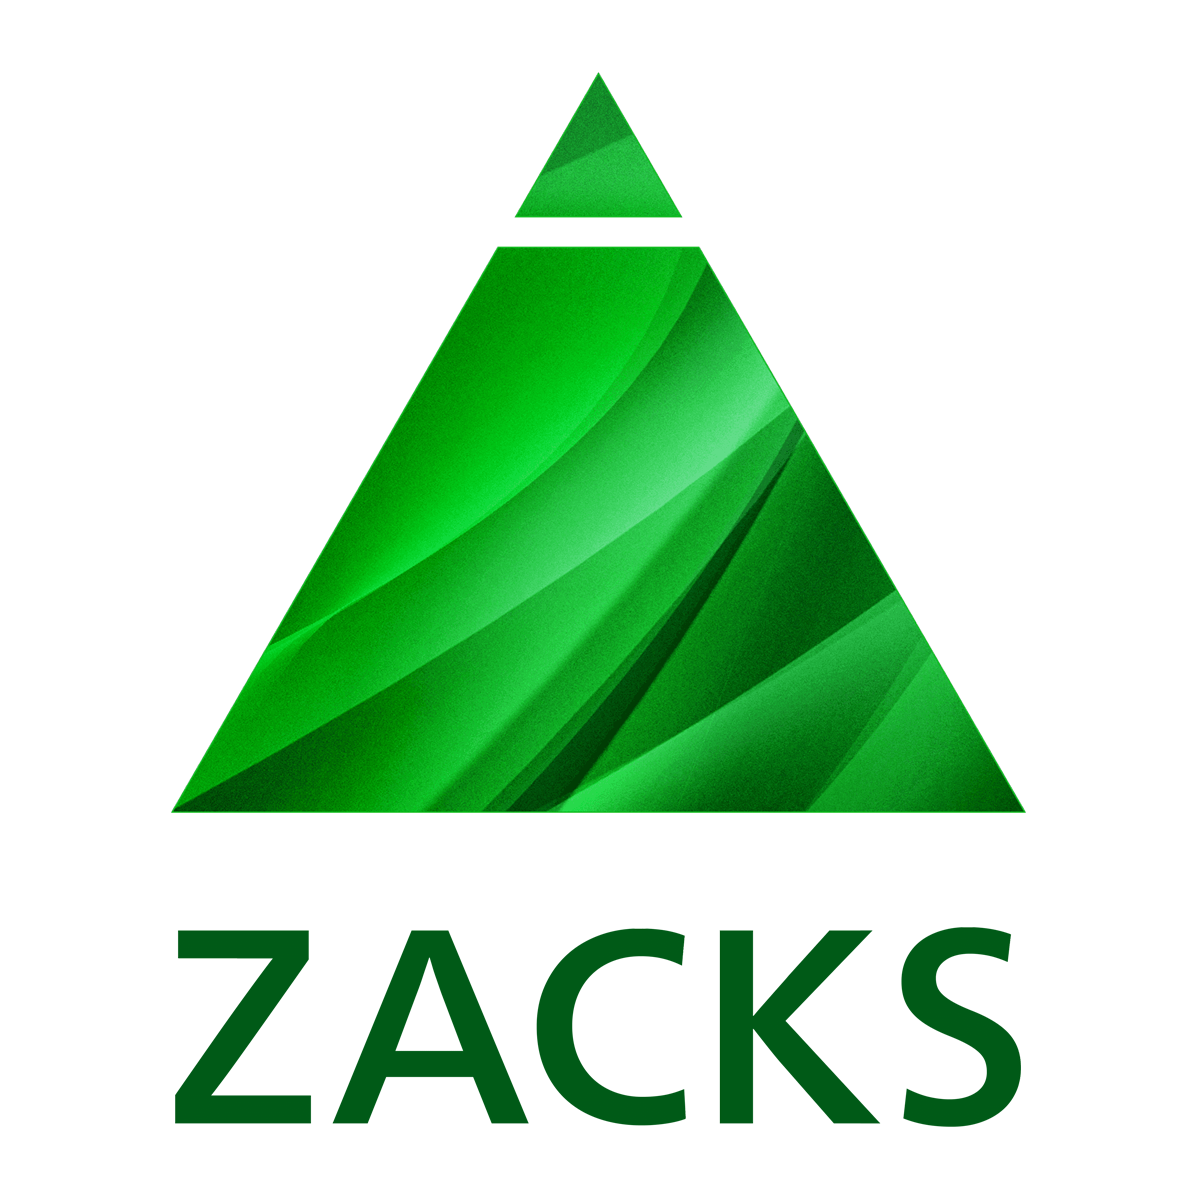 Avatar - Zacks Investment Research